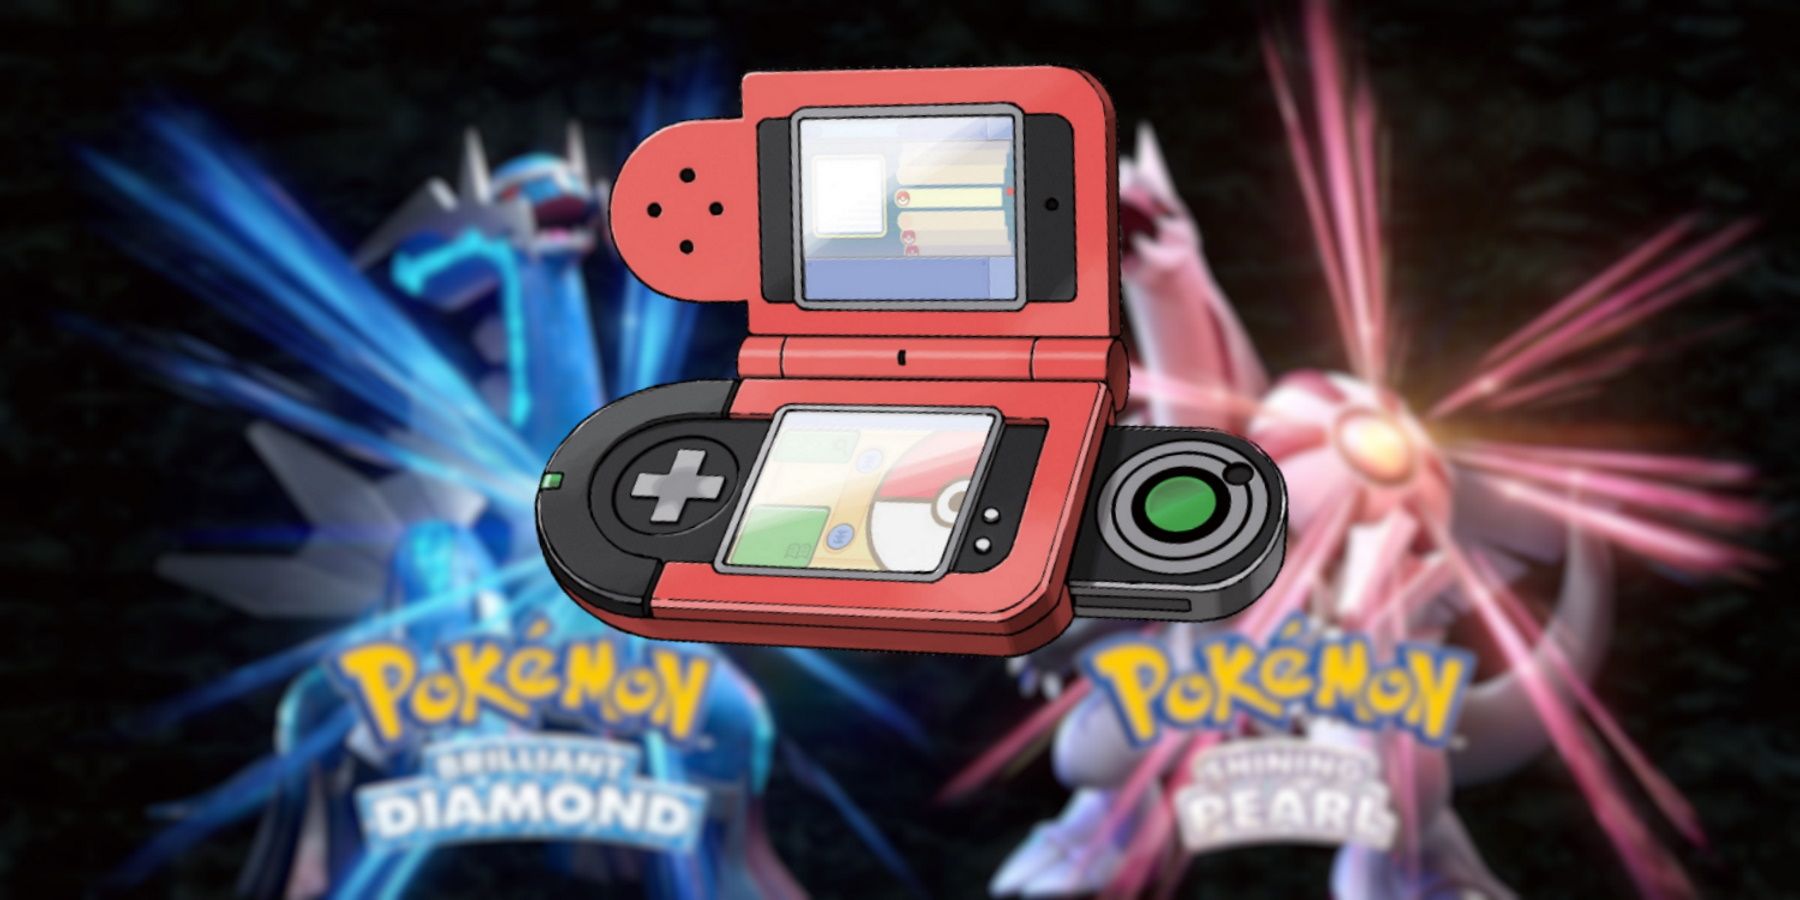 Pokémon Brilliant Diamond/Shining Pearl - Sinnoh Pokédex